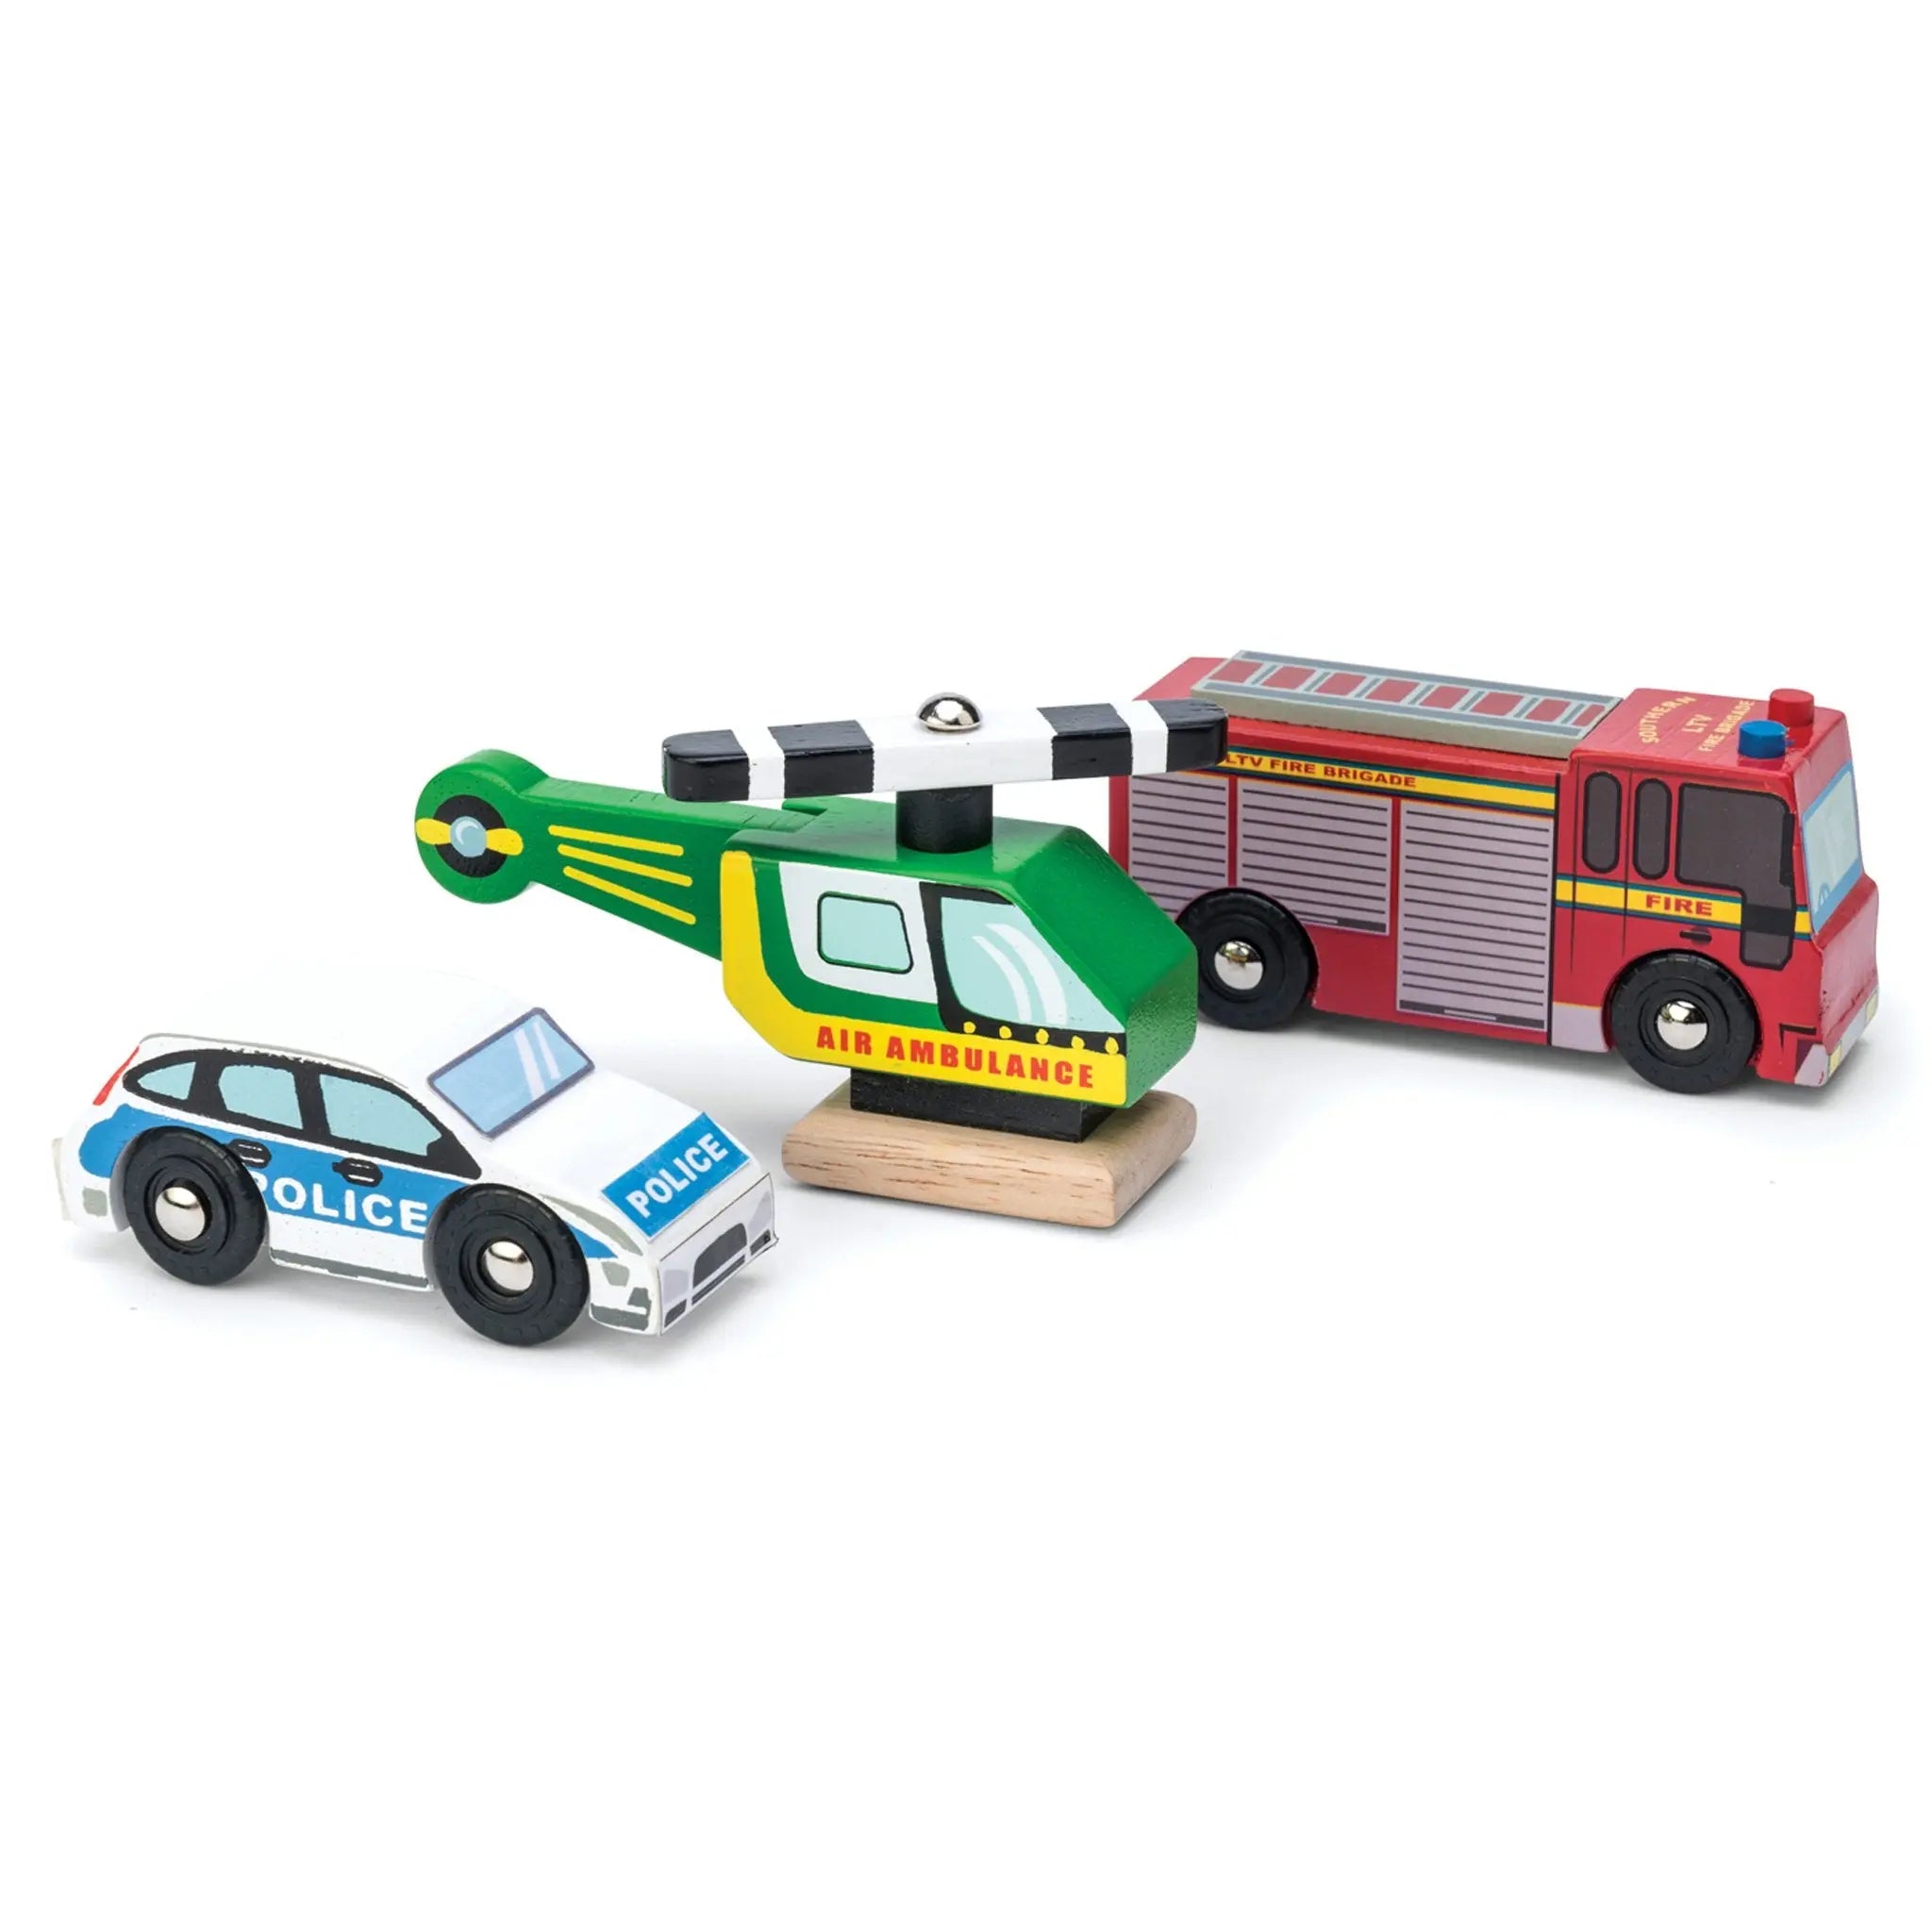 Emergency Vehicle Set-Wooden toys & more-Le Toy Van-Blue Almonds-London-South Kensington